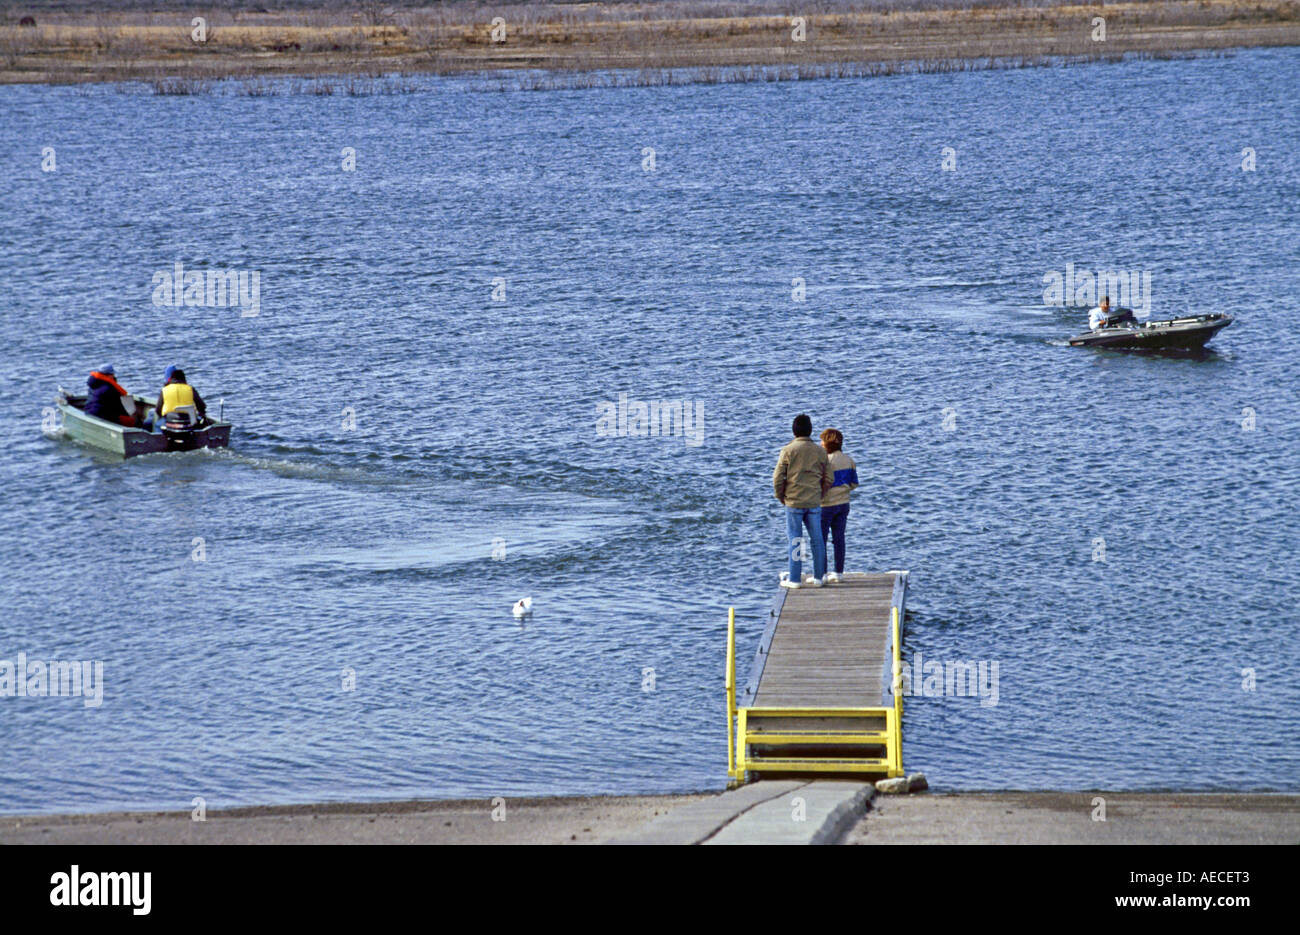 Boats, people at Calliham Unit of Choke Canyon Reservoir, Texas, USA Stock Photo